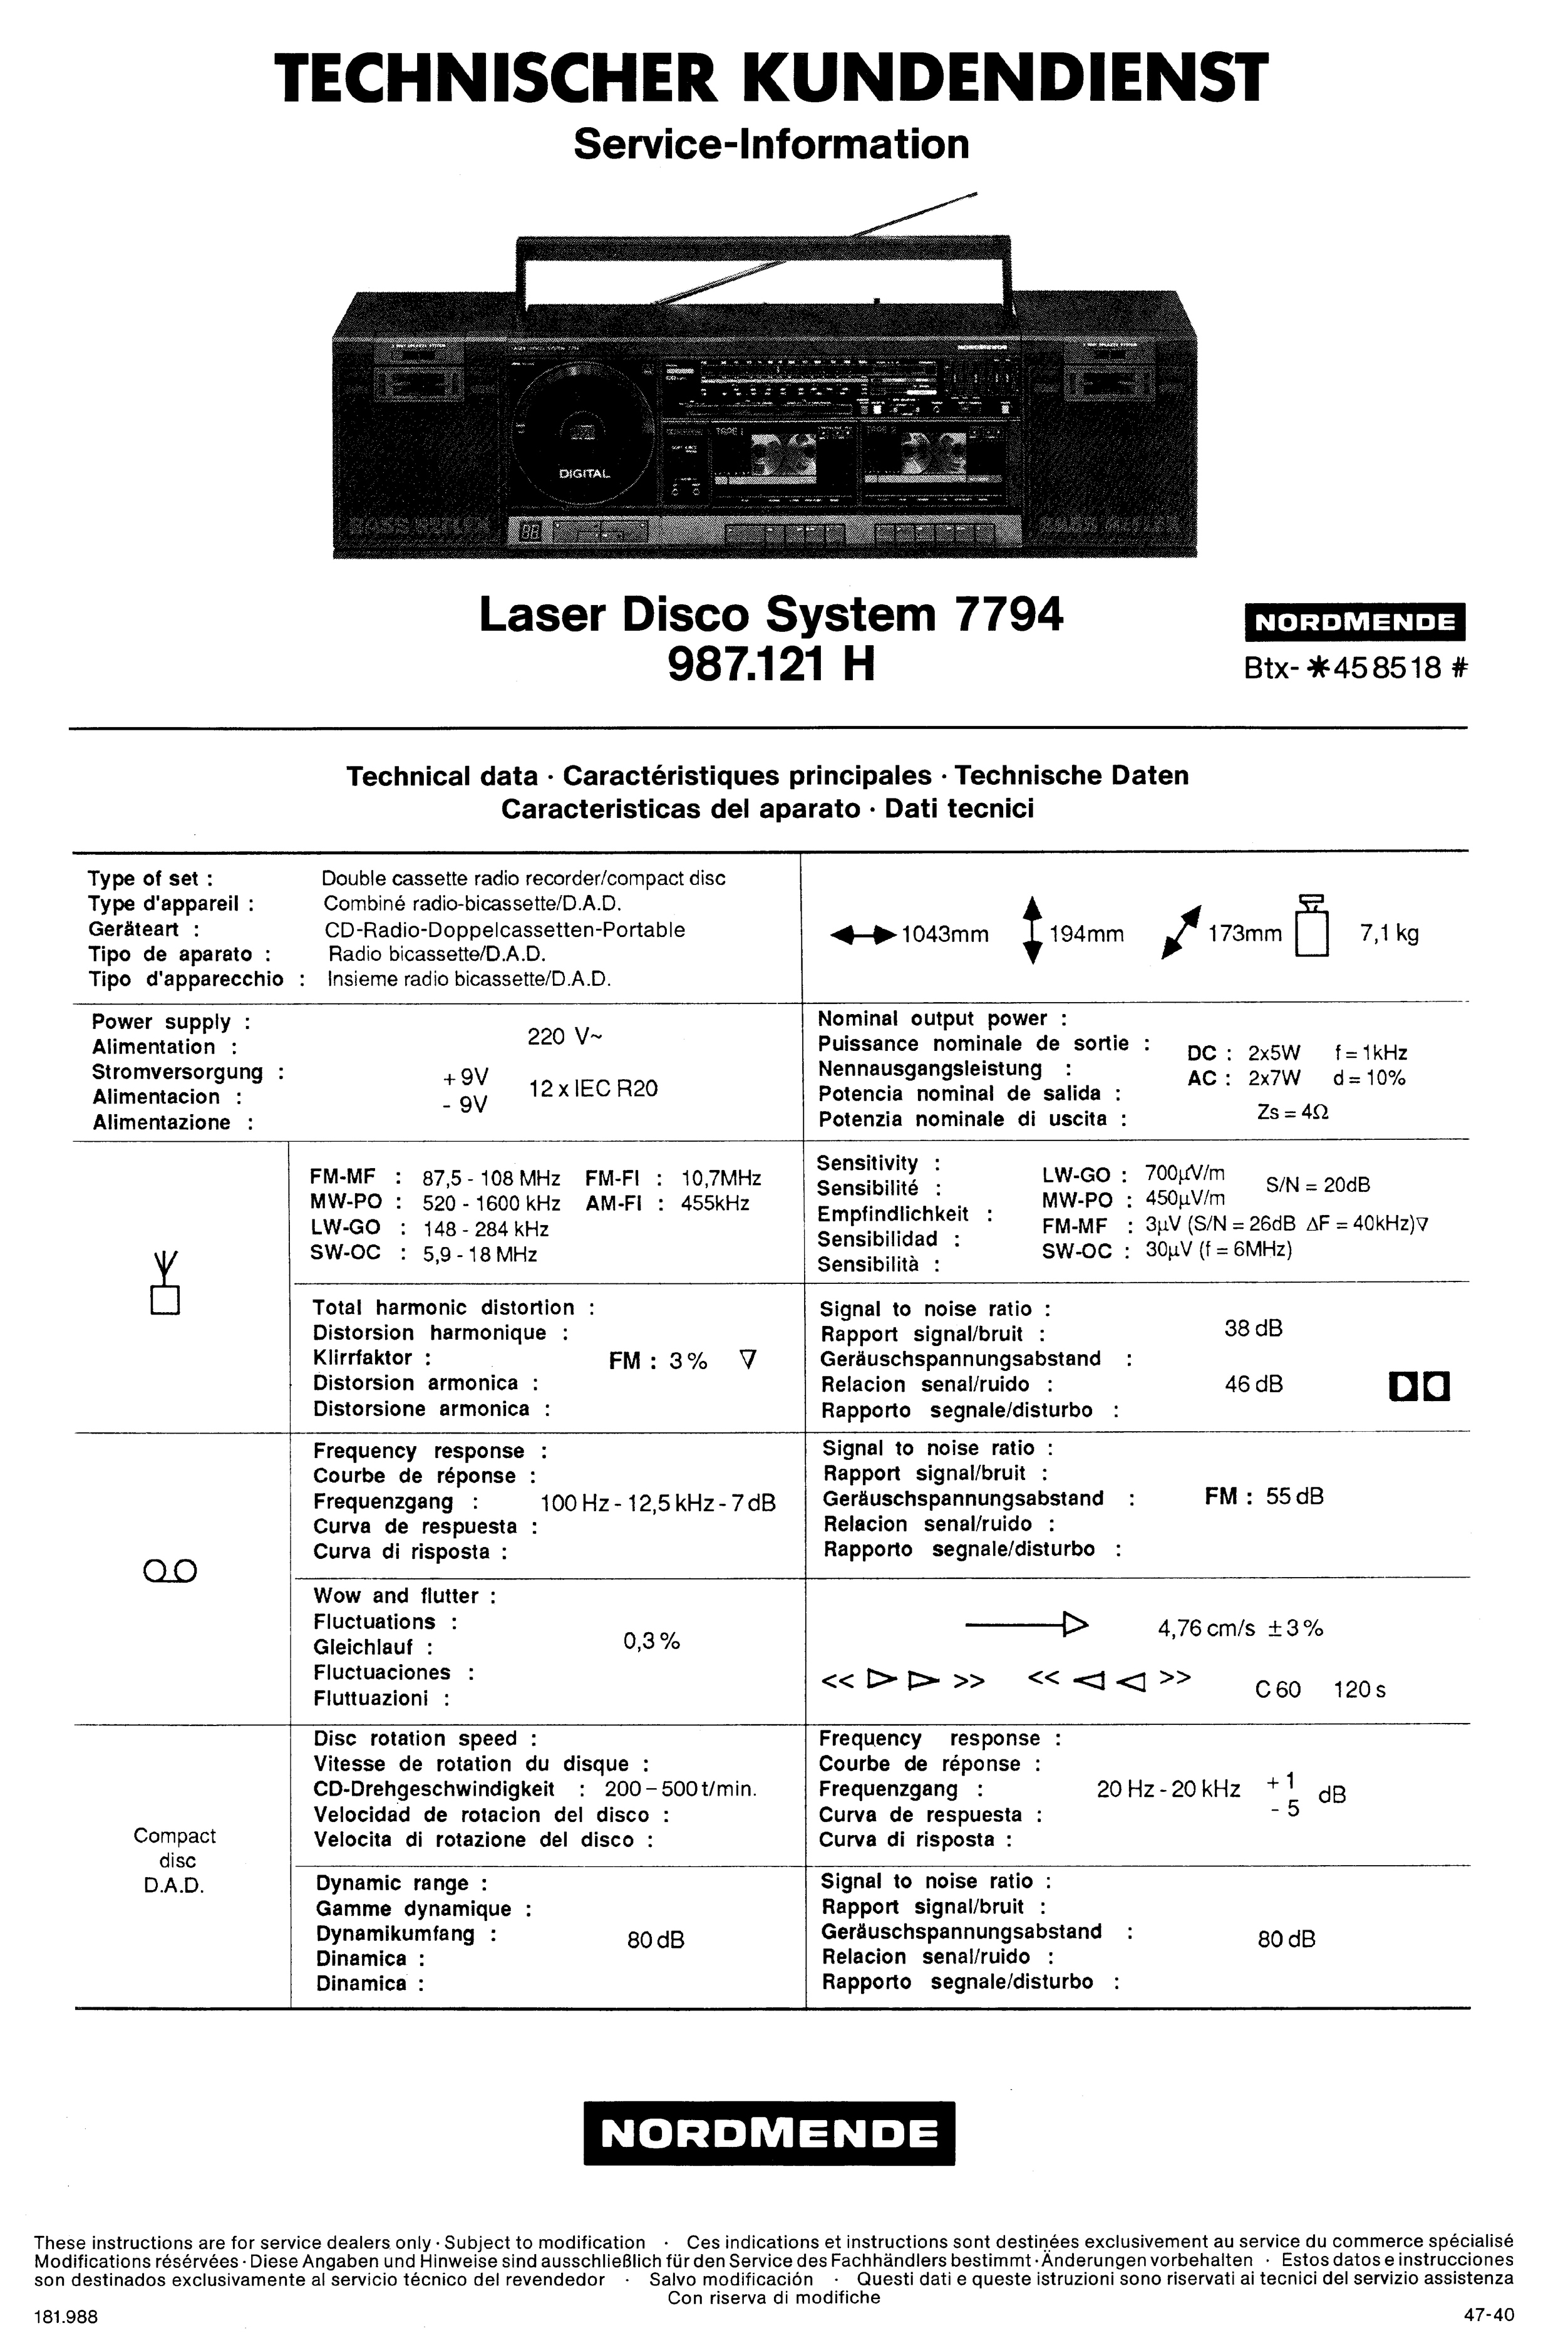 Nordmende Laser Disco 7794-Daten-19861.jpg